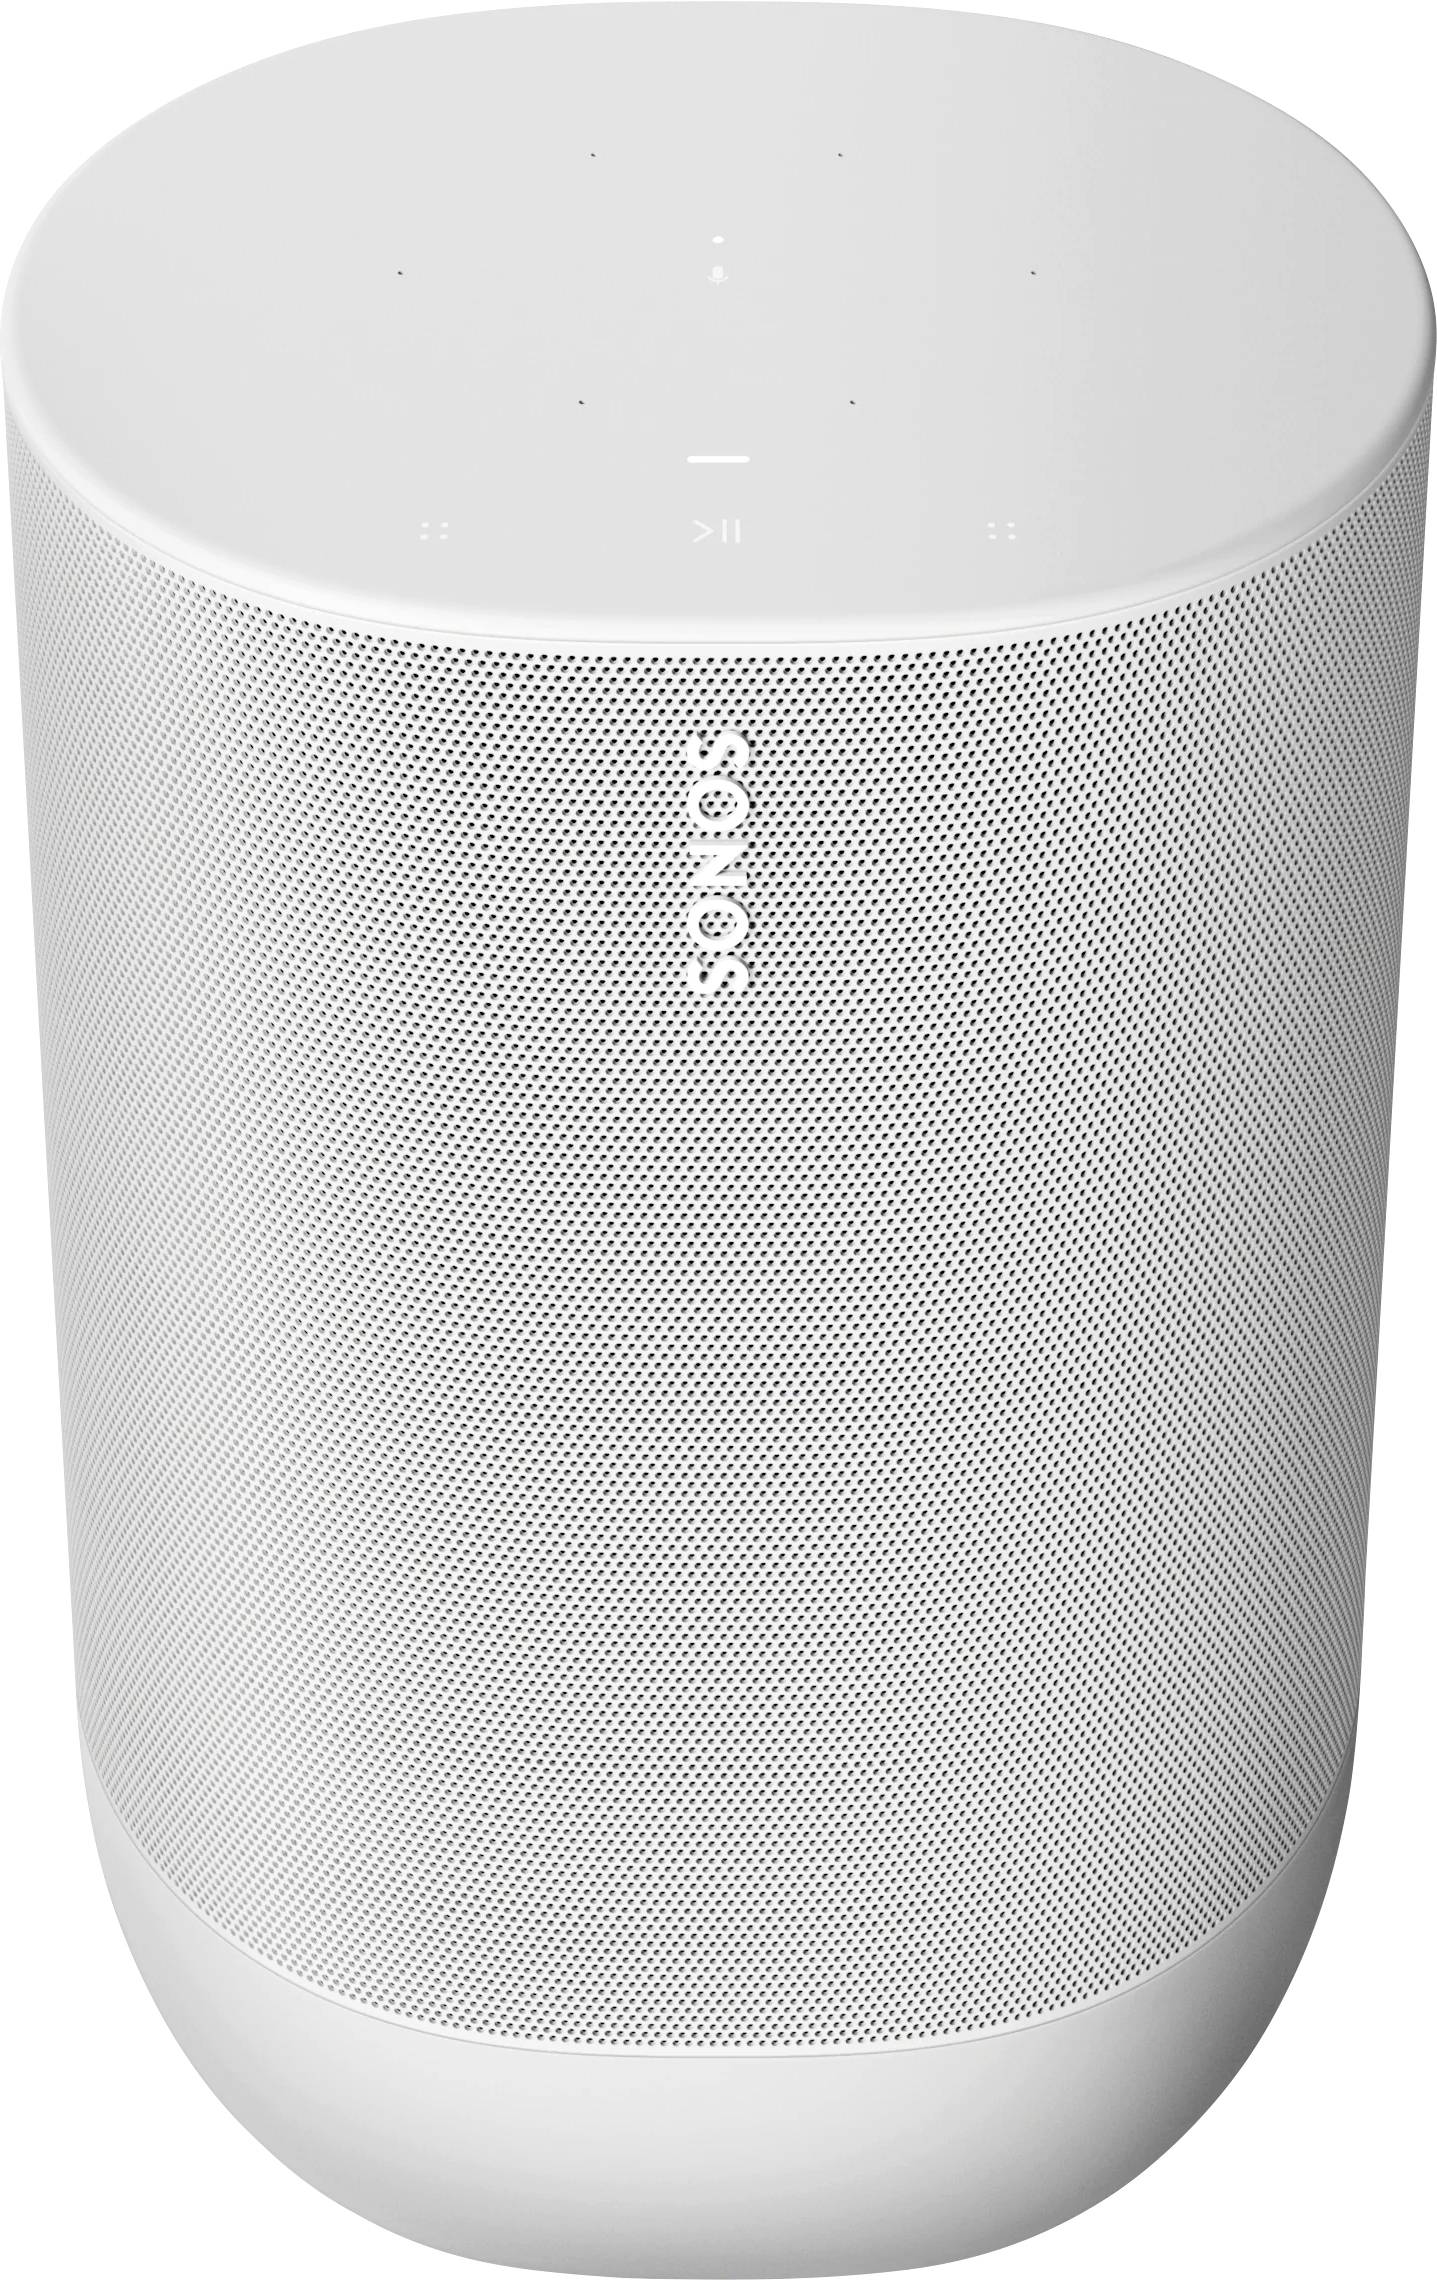 SONOS Move - Smart-Lautsprecher - tragbar - Bluetooth, Wi-Fi, Wi-Fi - App-gesteuert - zweiweg - weiß